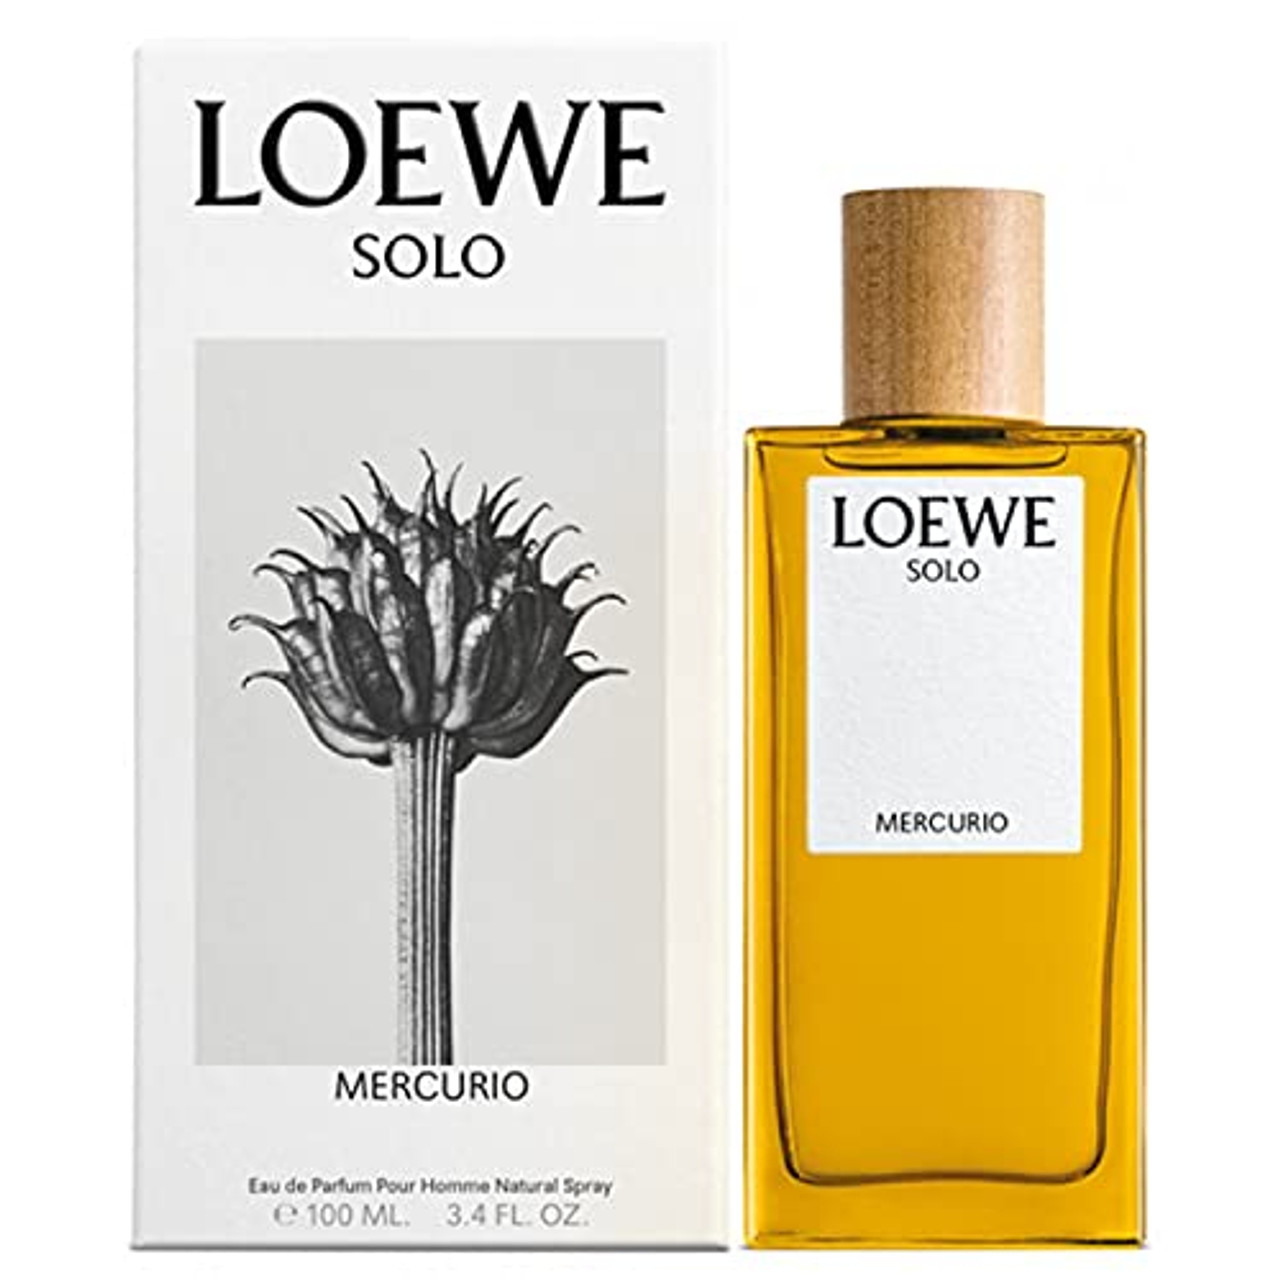 Loewe Solo Mercurio Eau de Parfum 100ml Spray